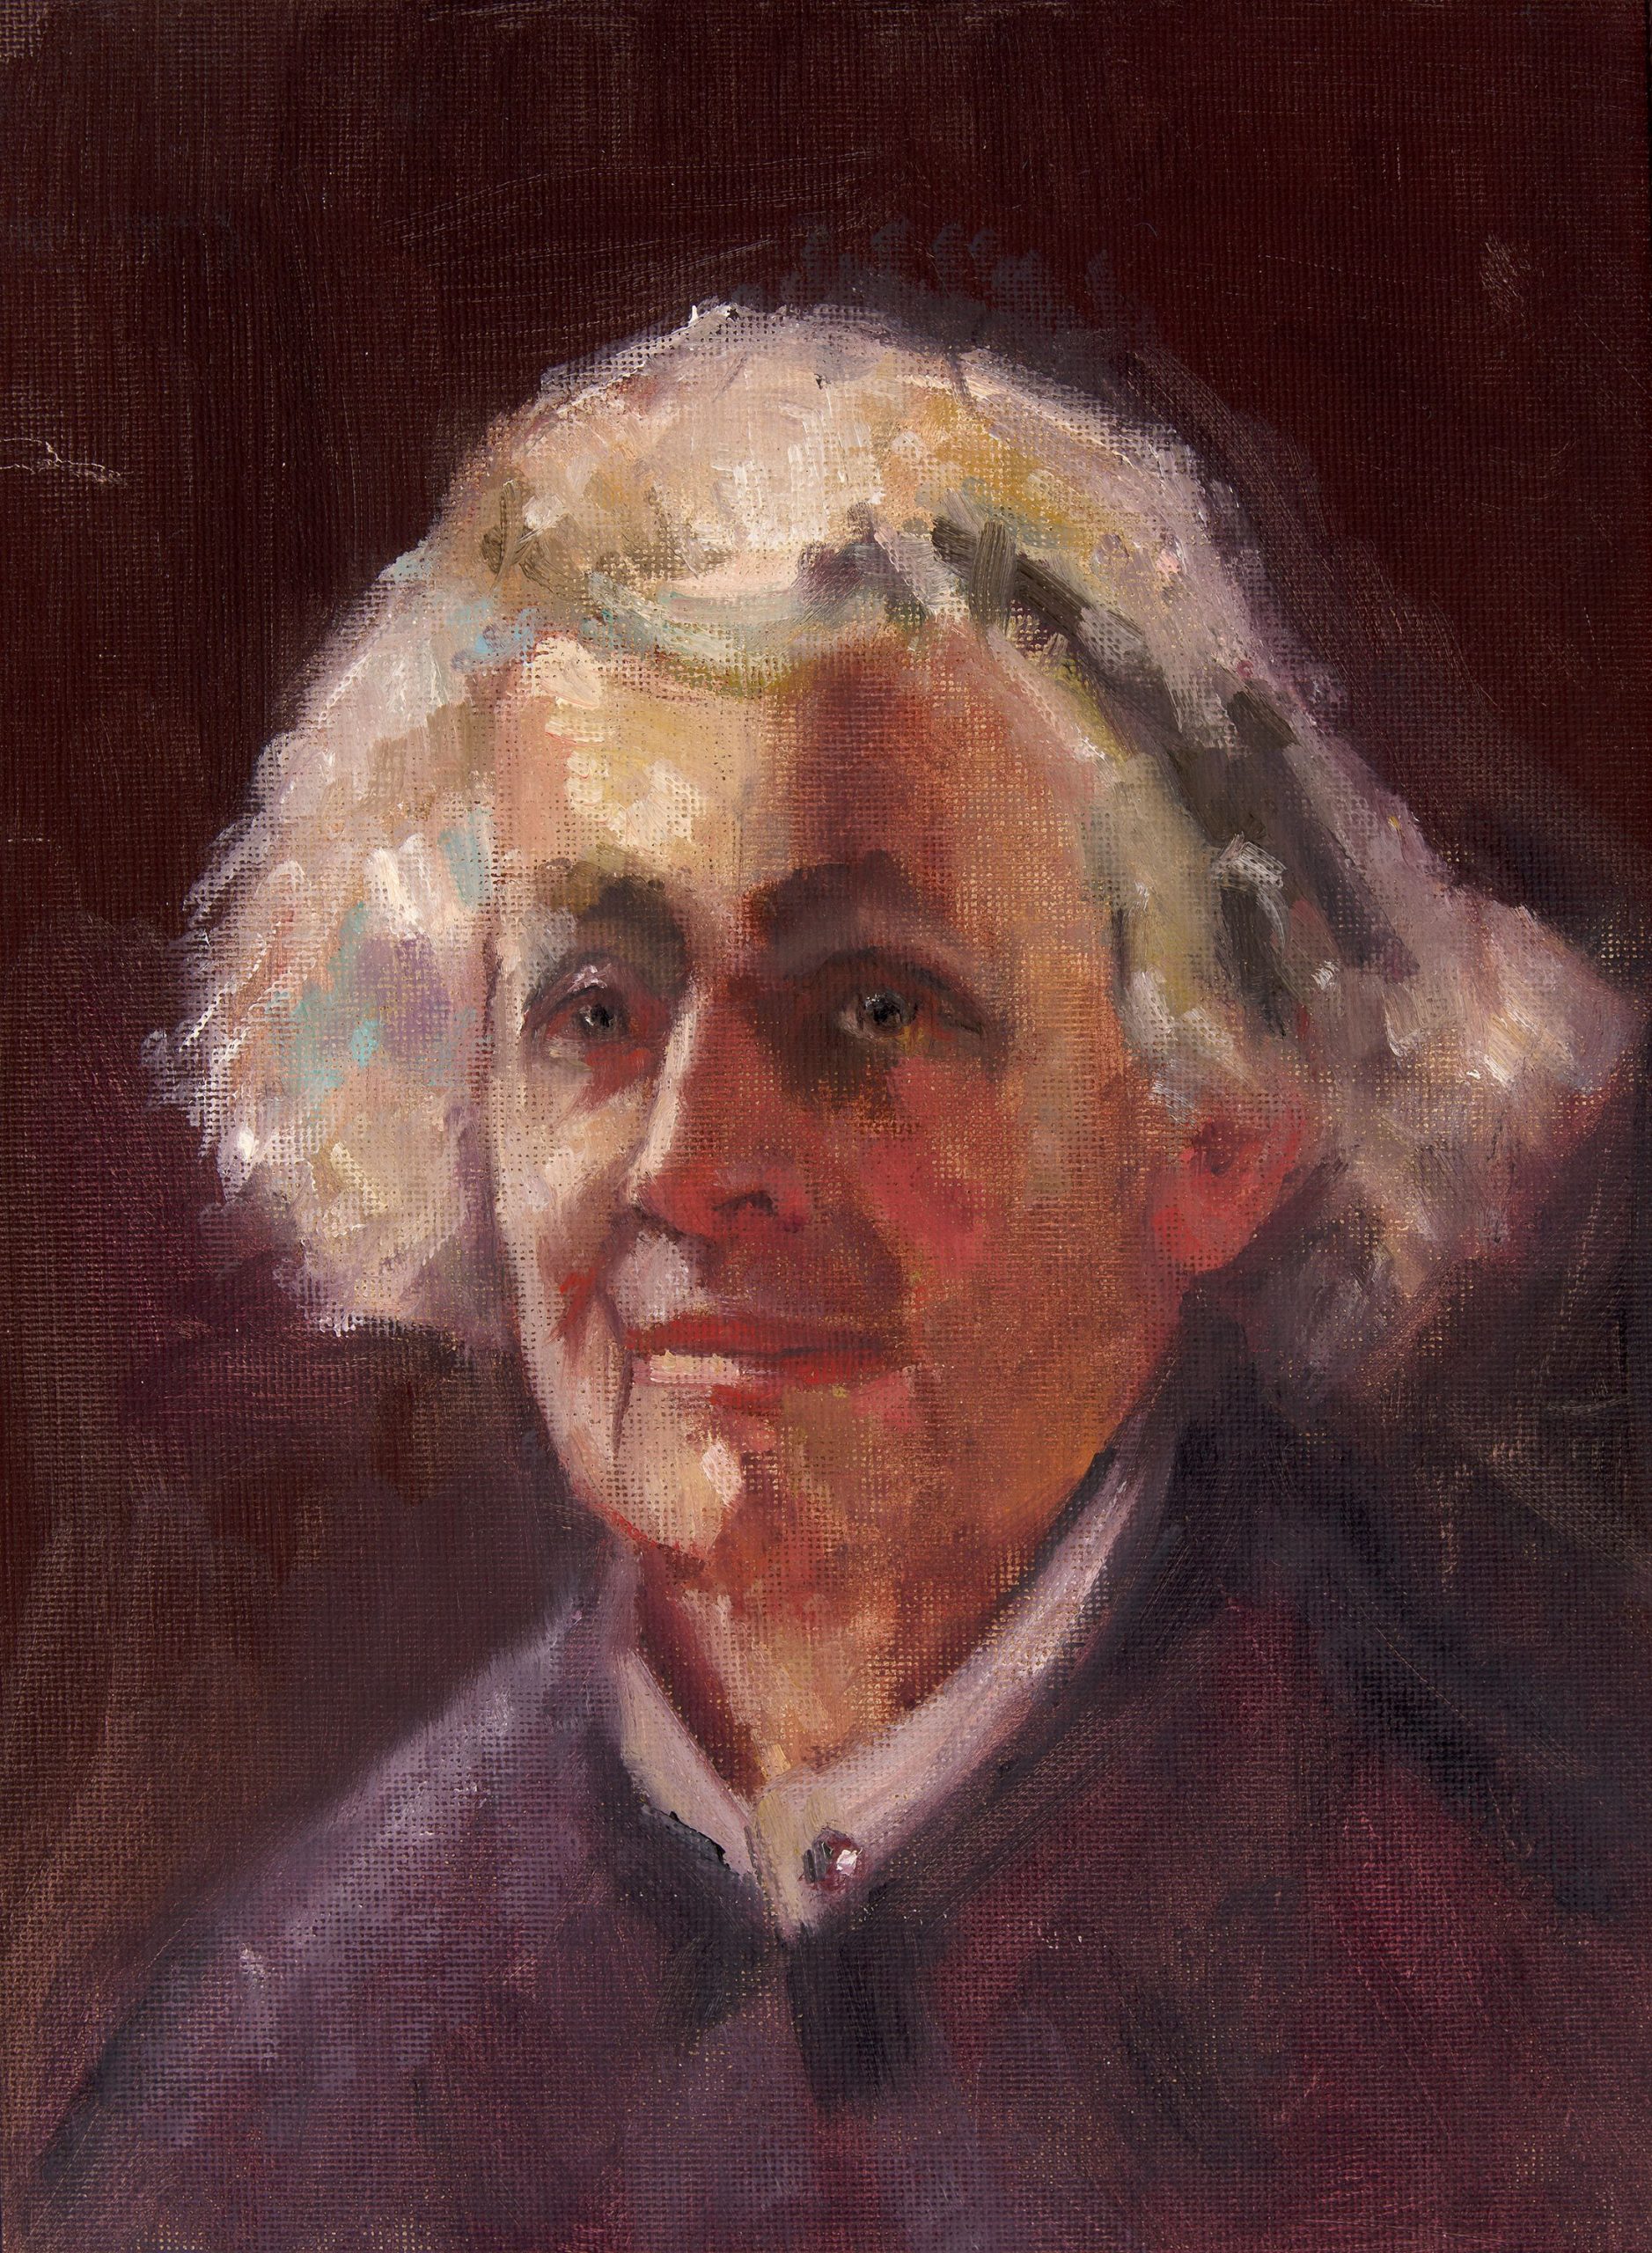 Painting of an older gentlemen with longer white hair